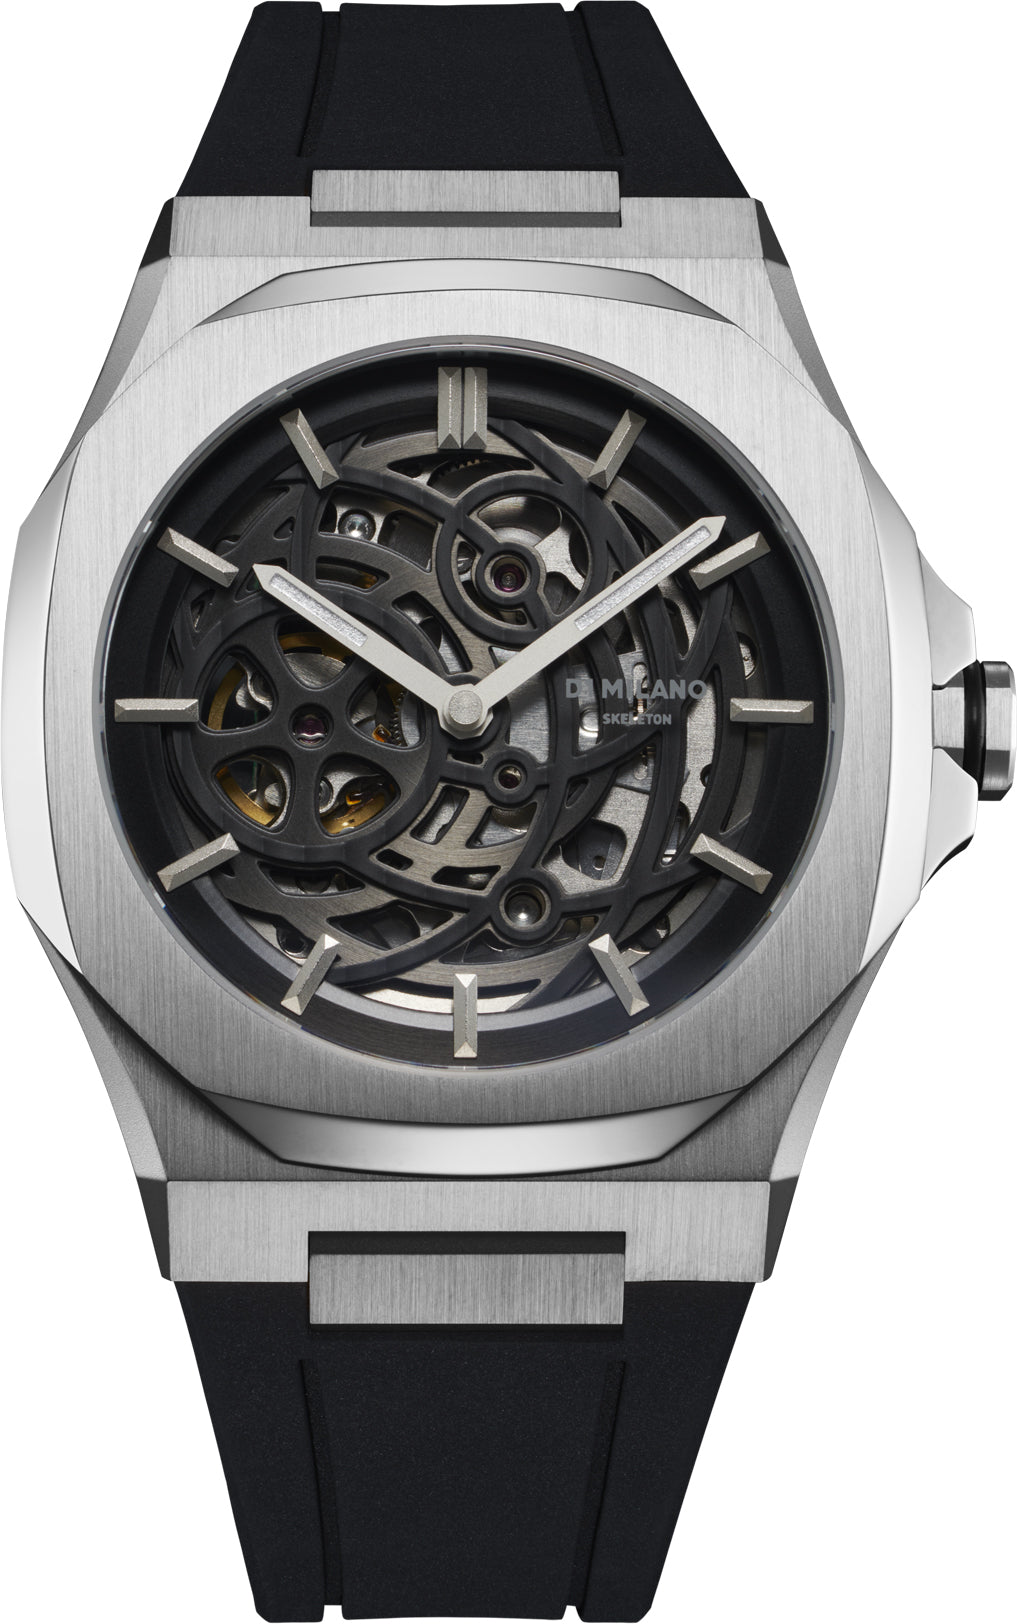 Photos - Wrist Watch Milano D1  Watch Skeleton Silver - Black DLM-090 